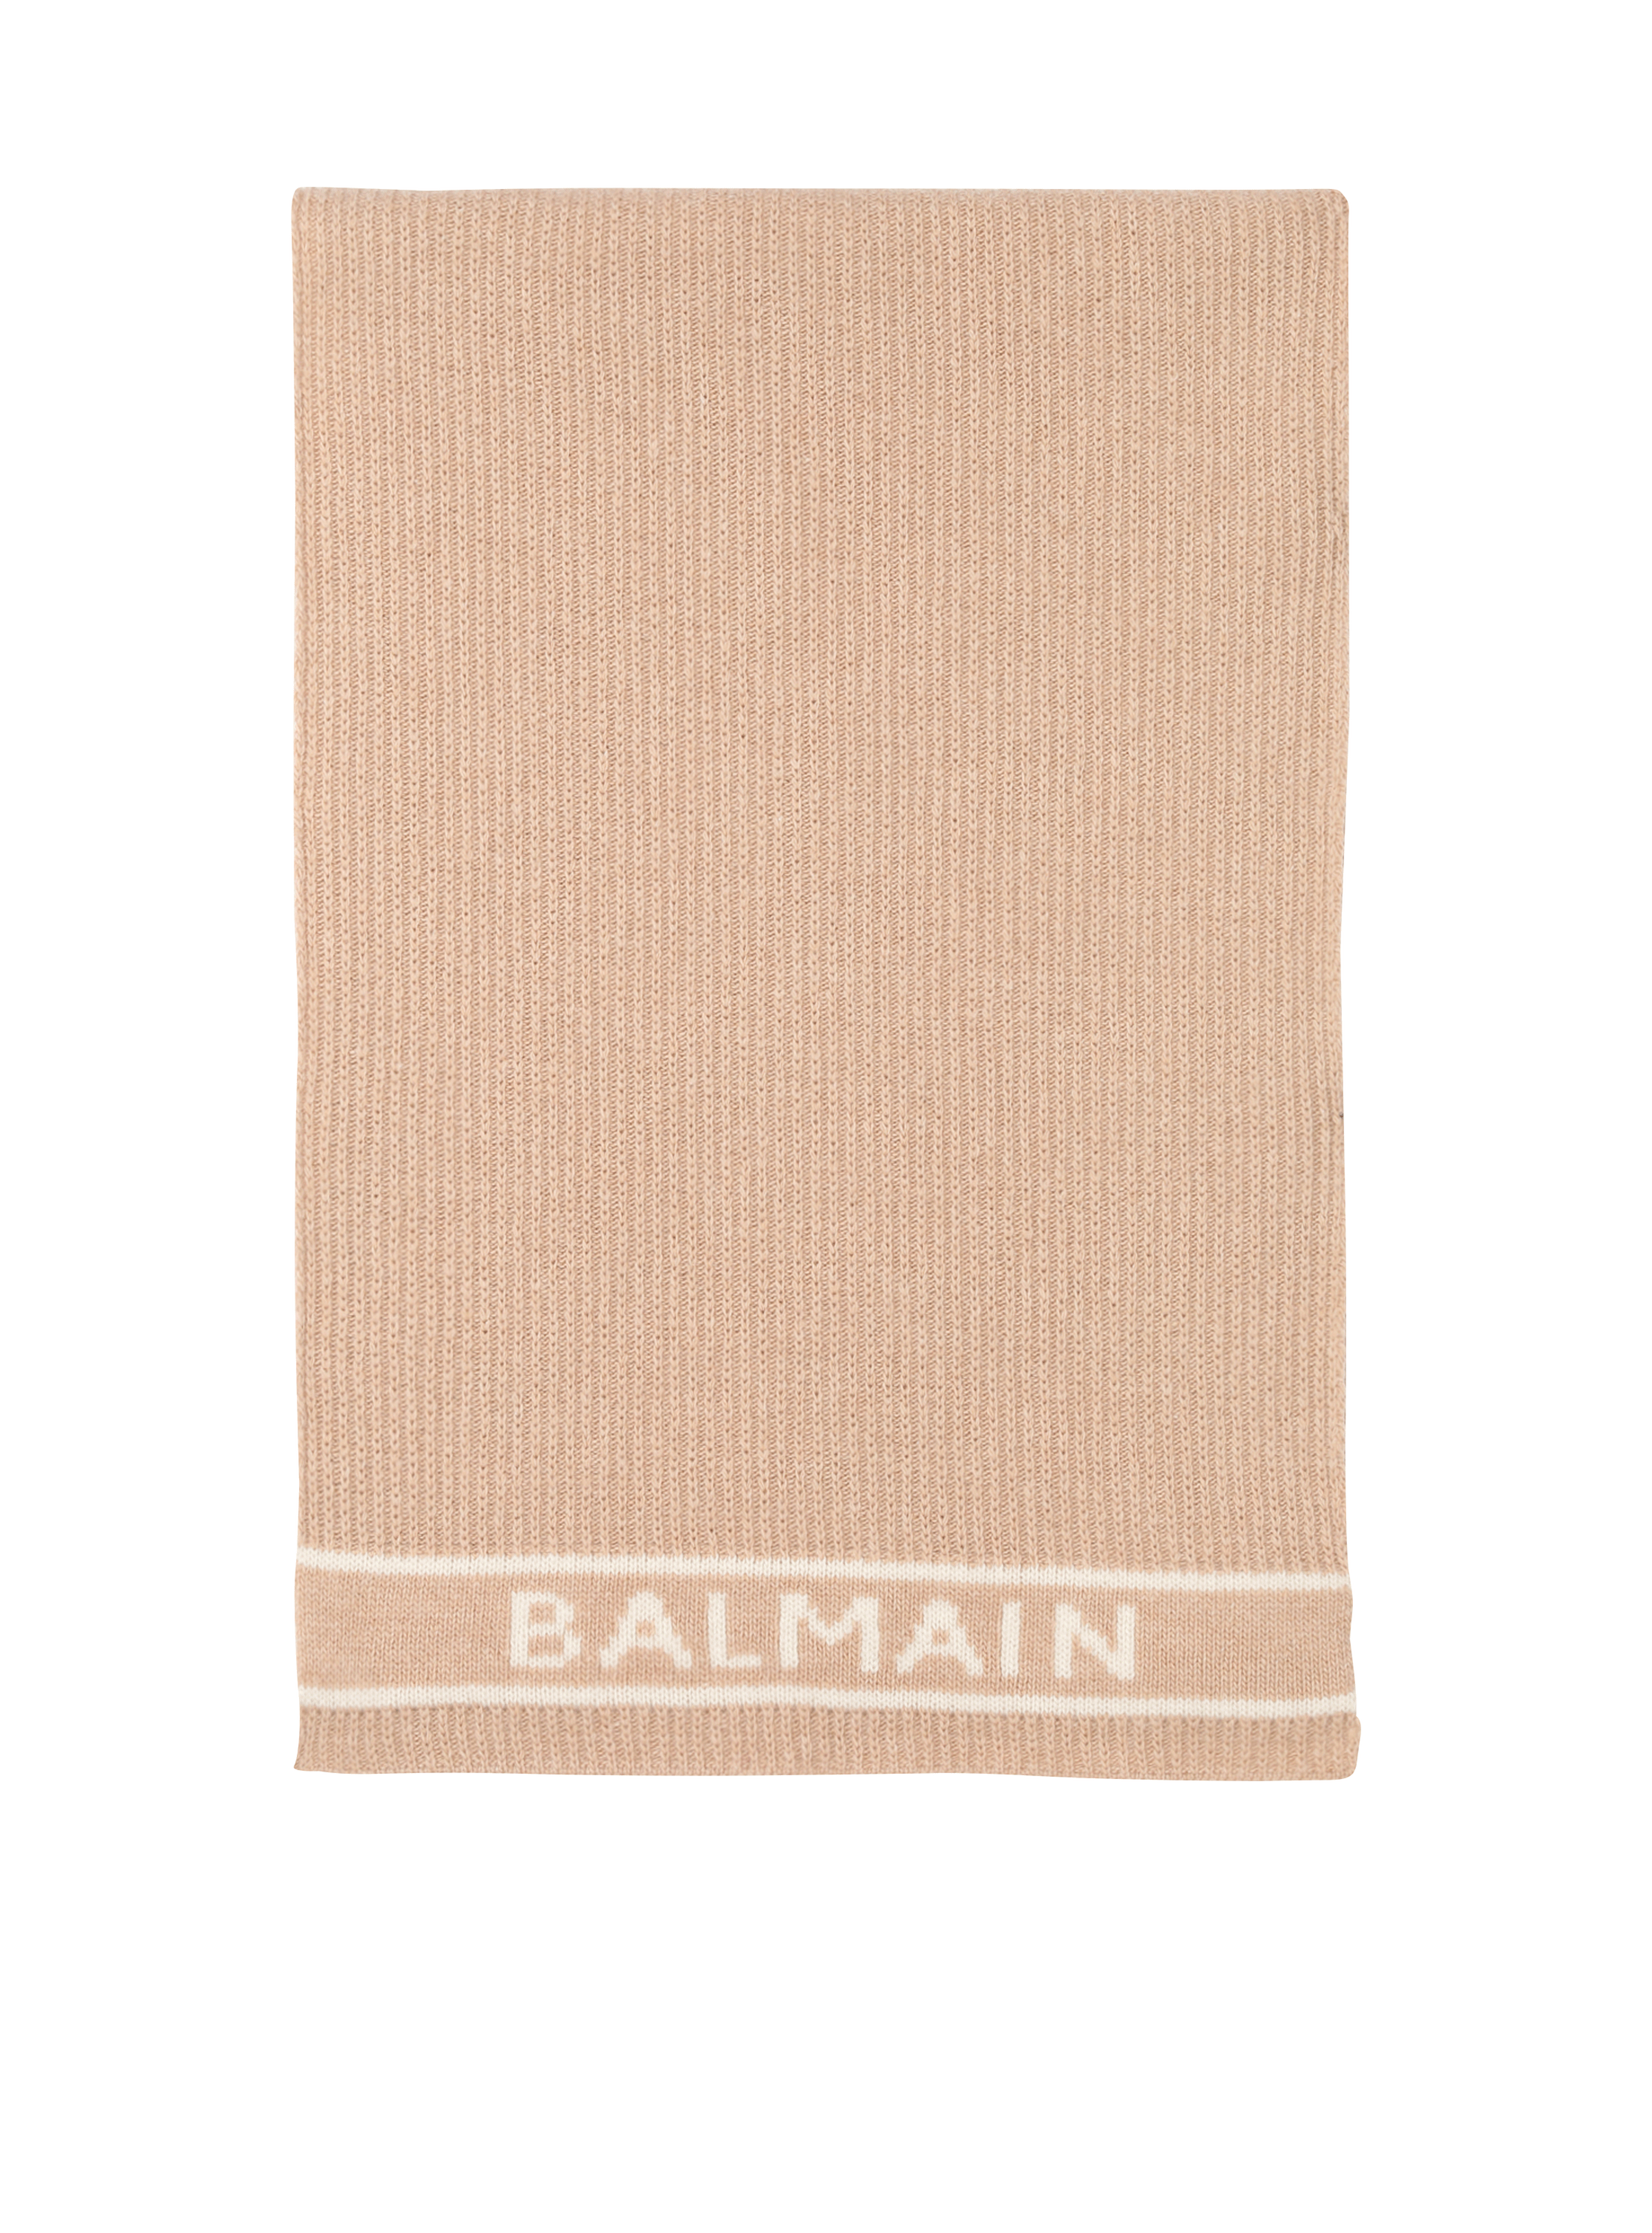 Wool scarf with Balmain logo, beige